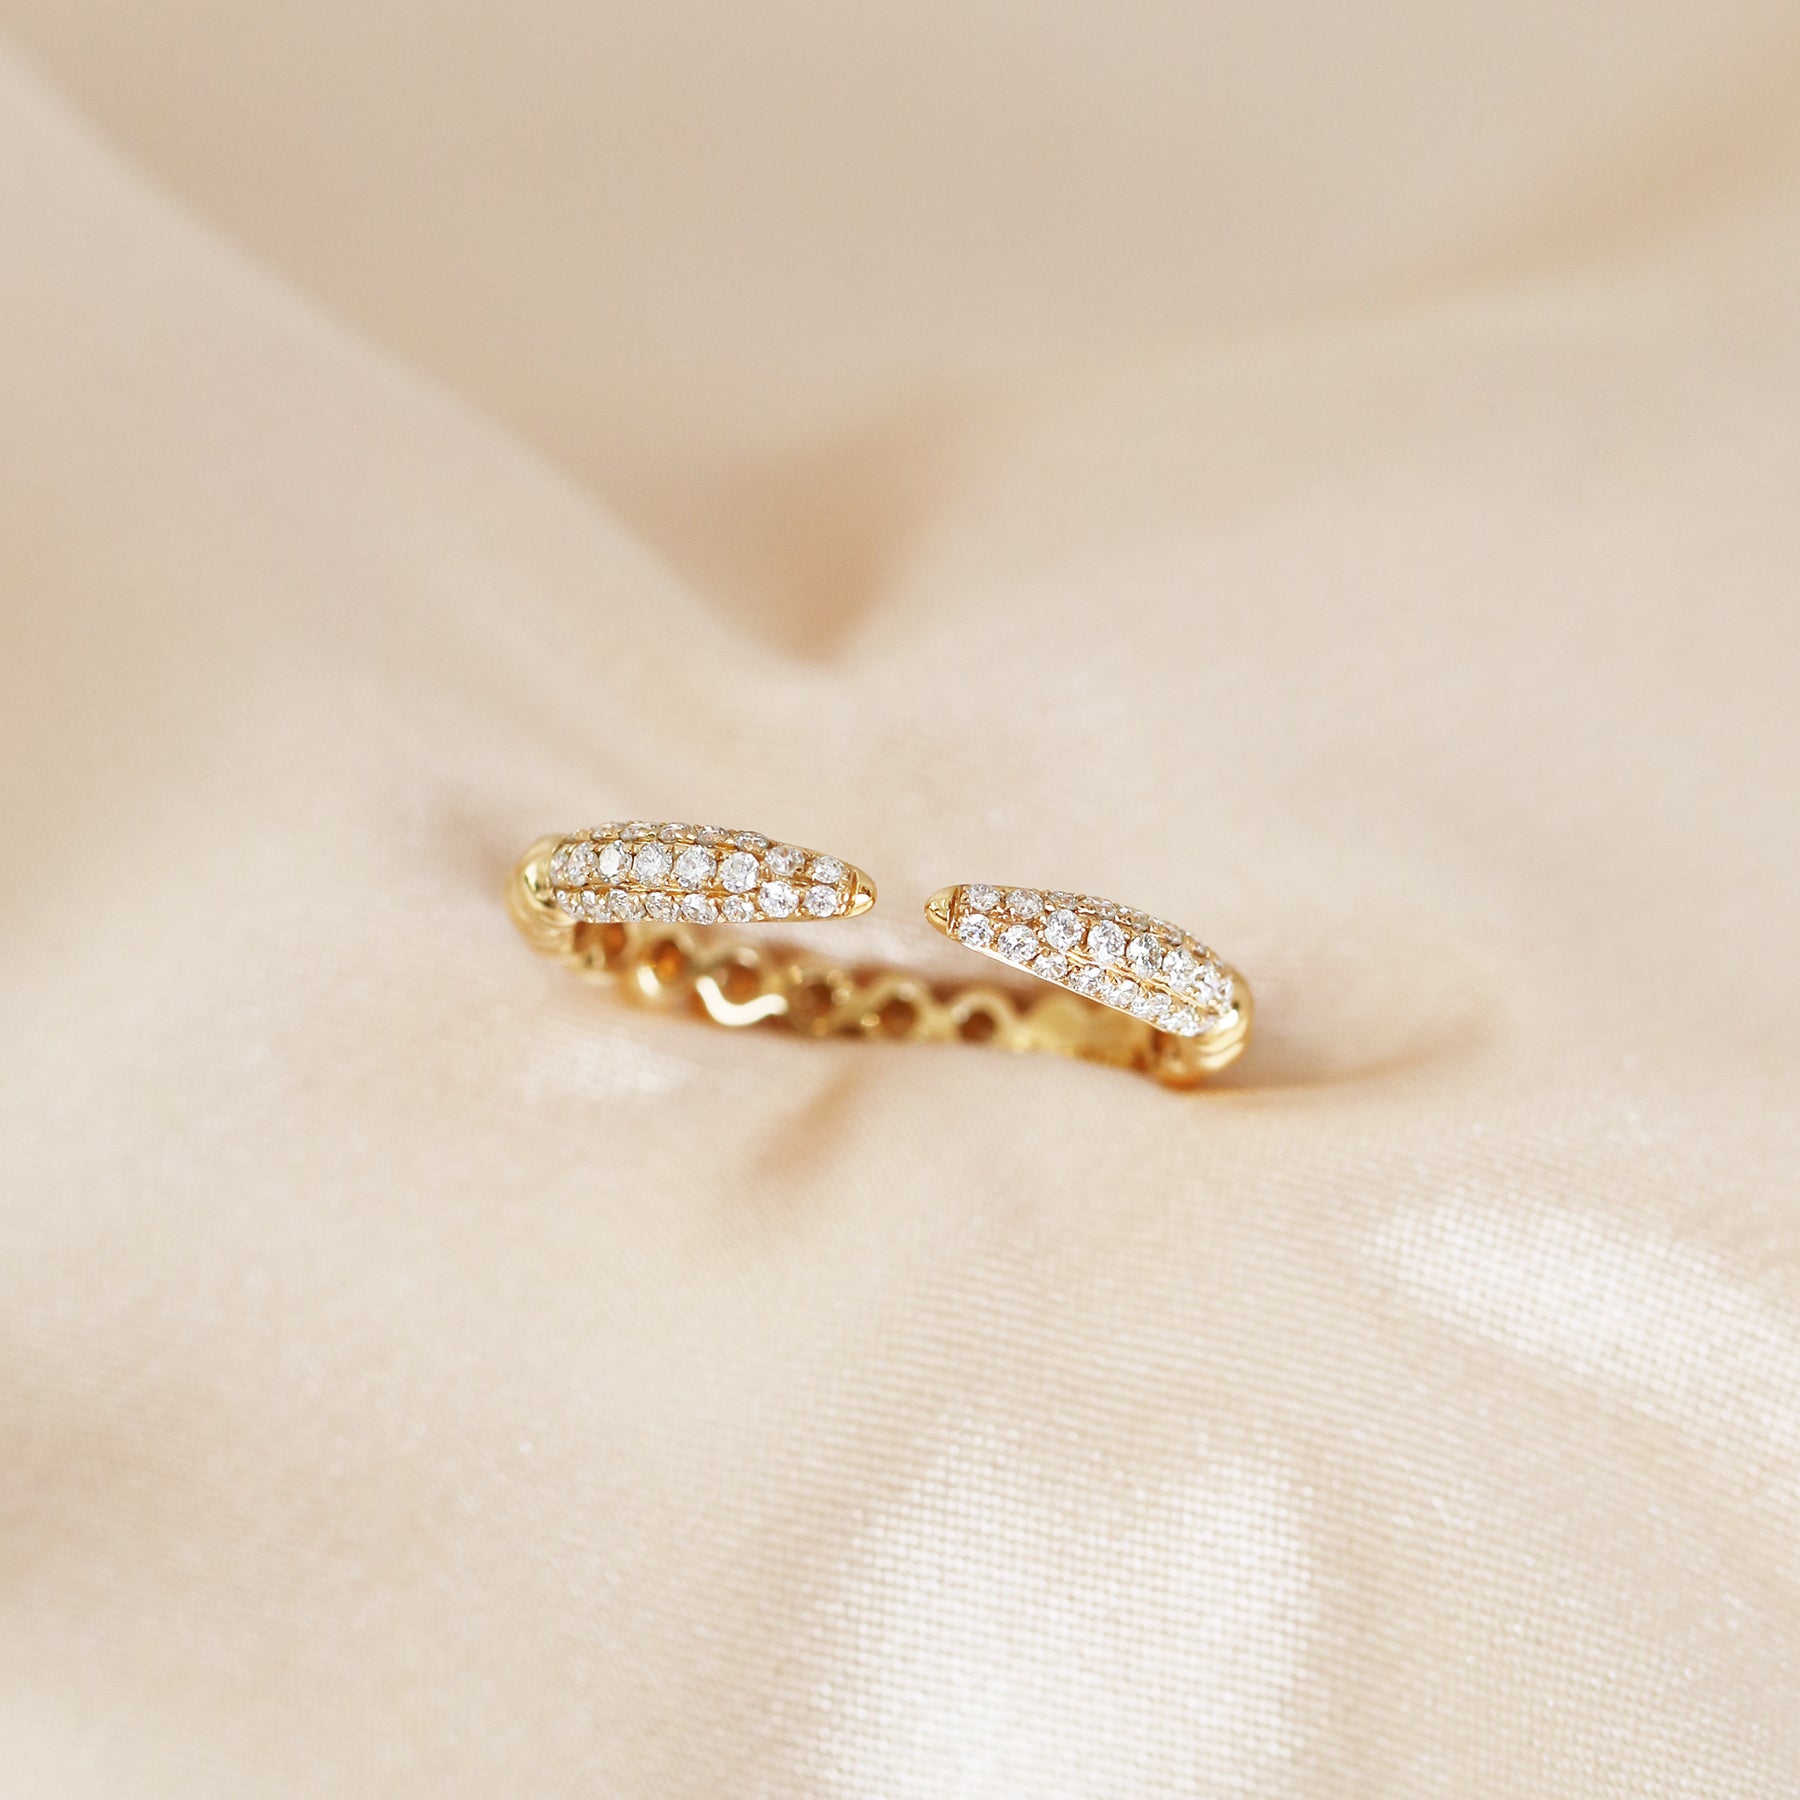 香檳色背景18k玫瑰金微鑲開口鑽石戒指  18k Rose Gold Micro Pavé Setting Open Ring in champagne gold background 